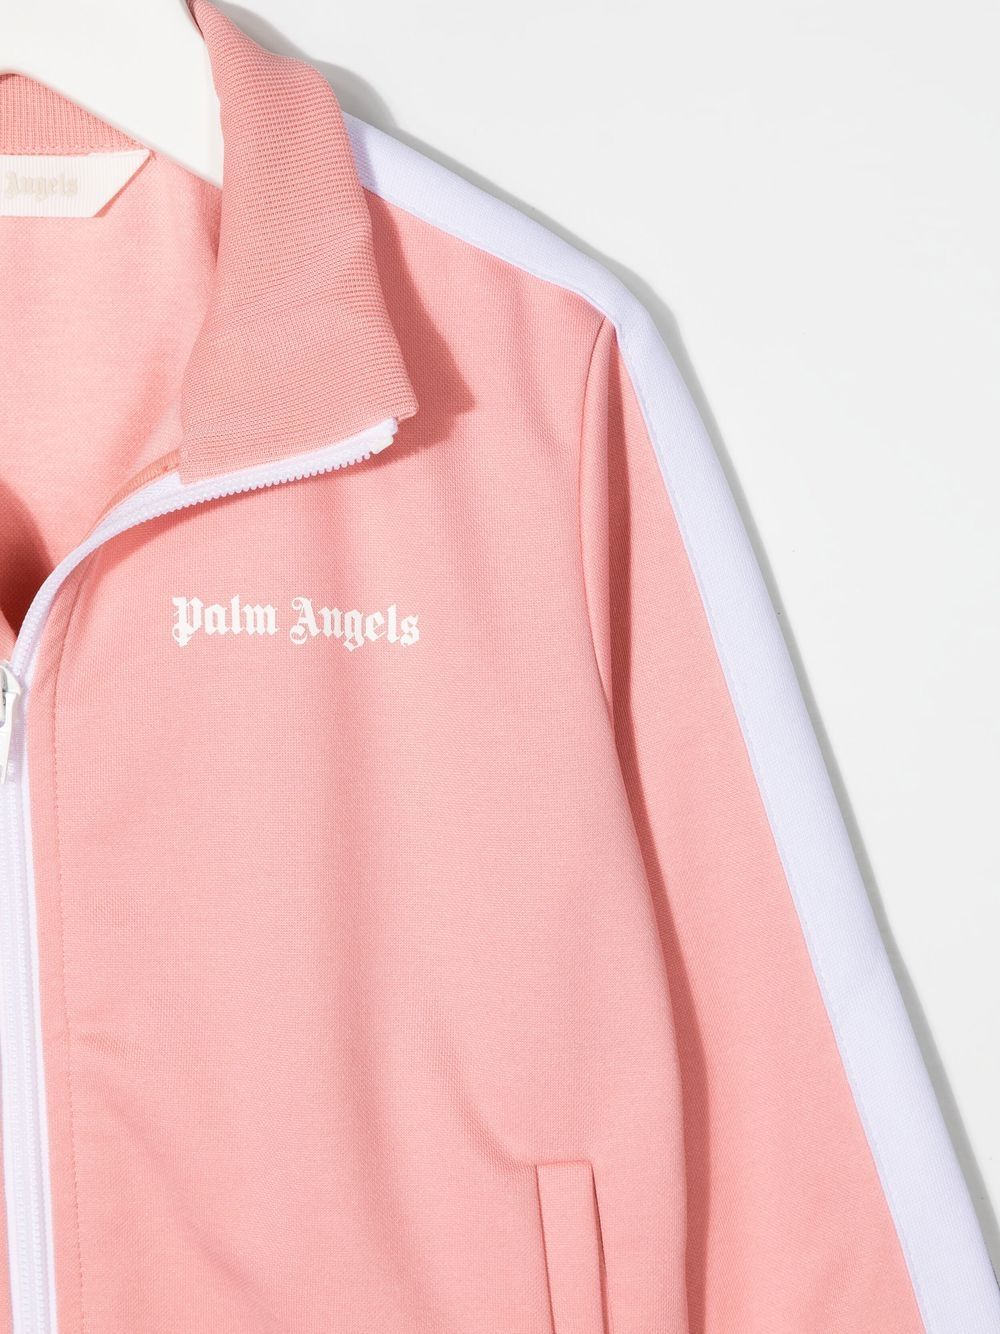 PALM ANGELS KIDS Track Jacket Pink/White - MAISONDEFASHION.COM